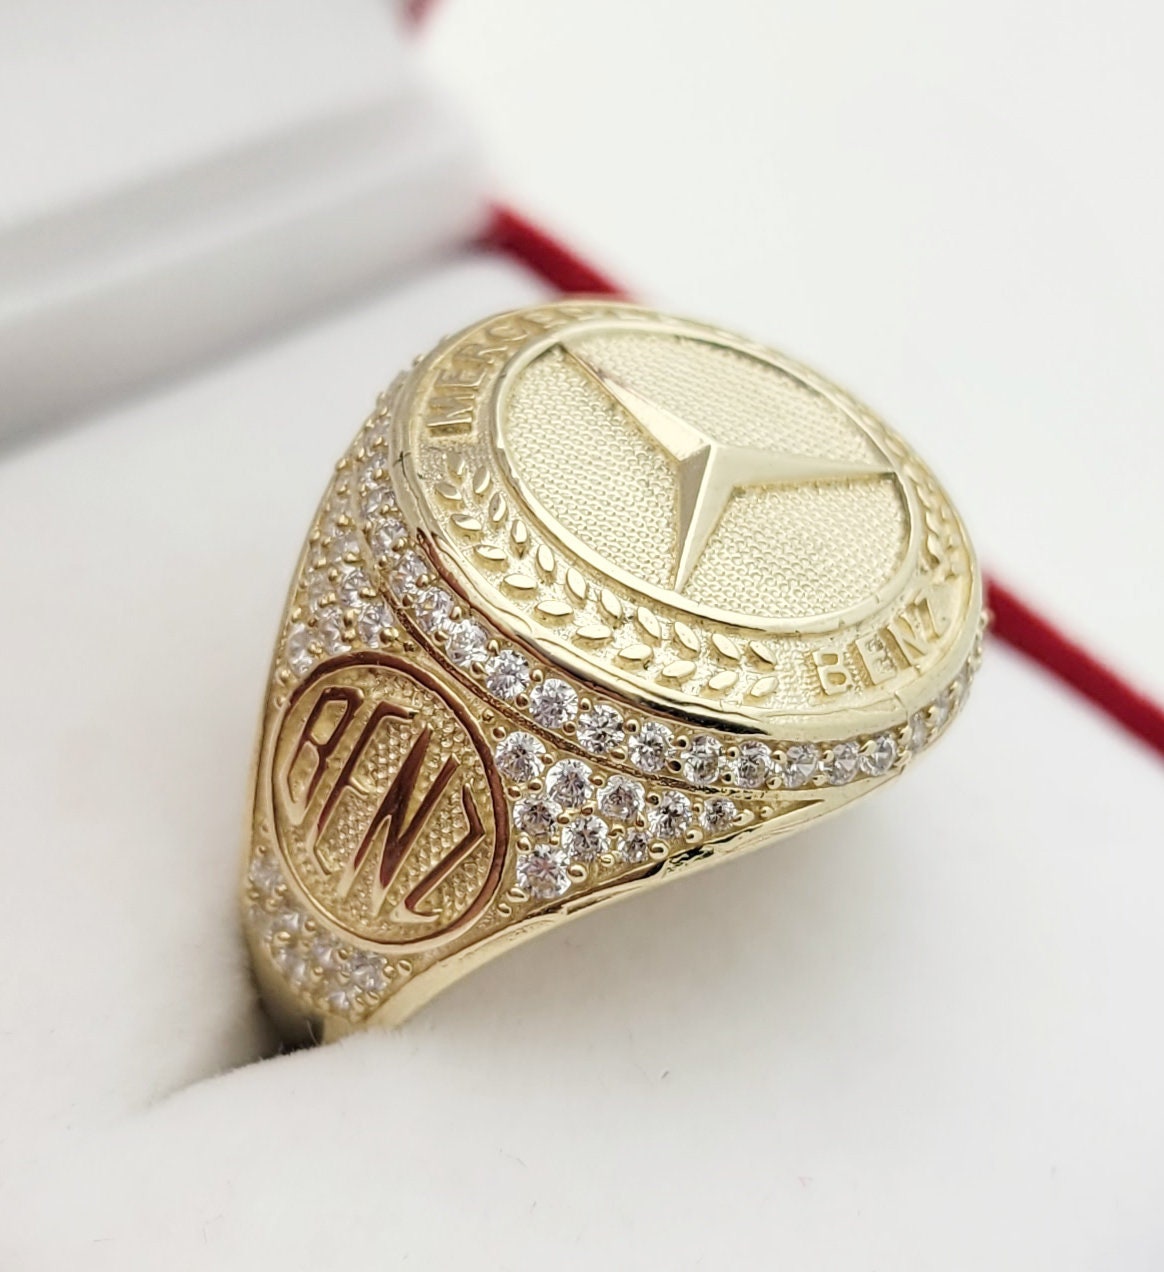 Mercedes Ring | Mens ring designs, Mens gold rings, Gold rings fashion